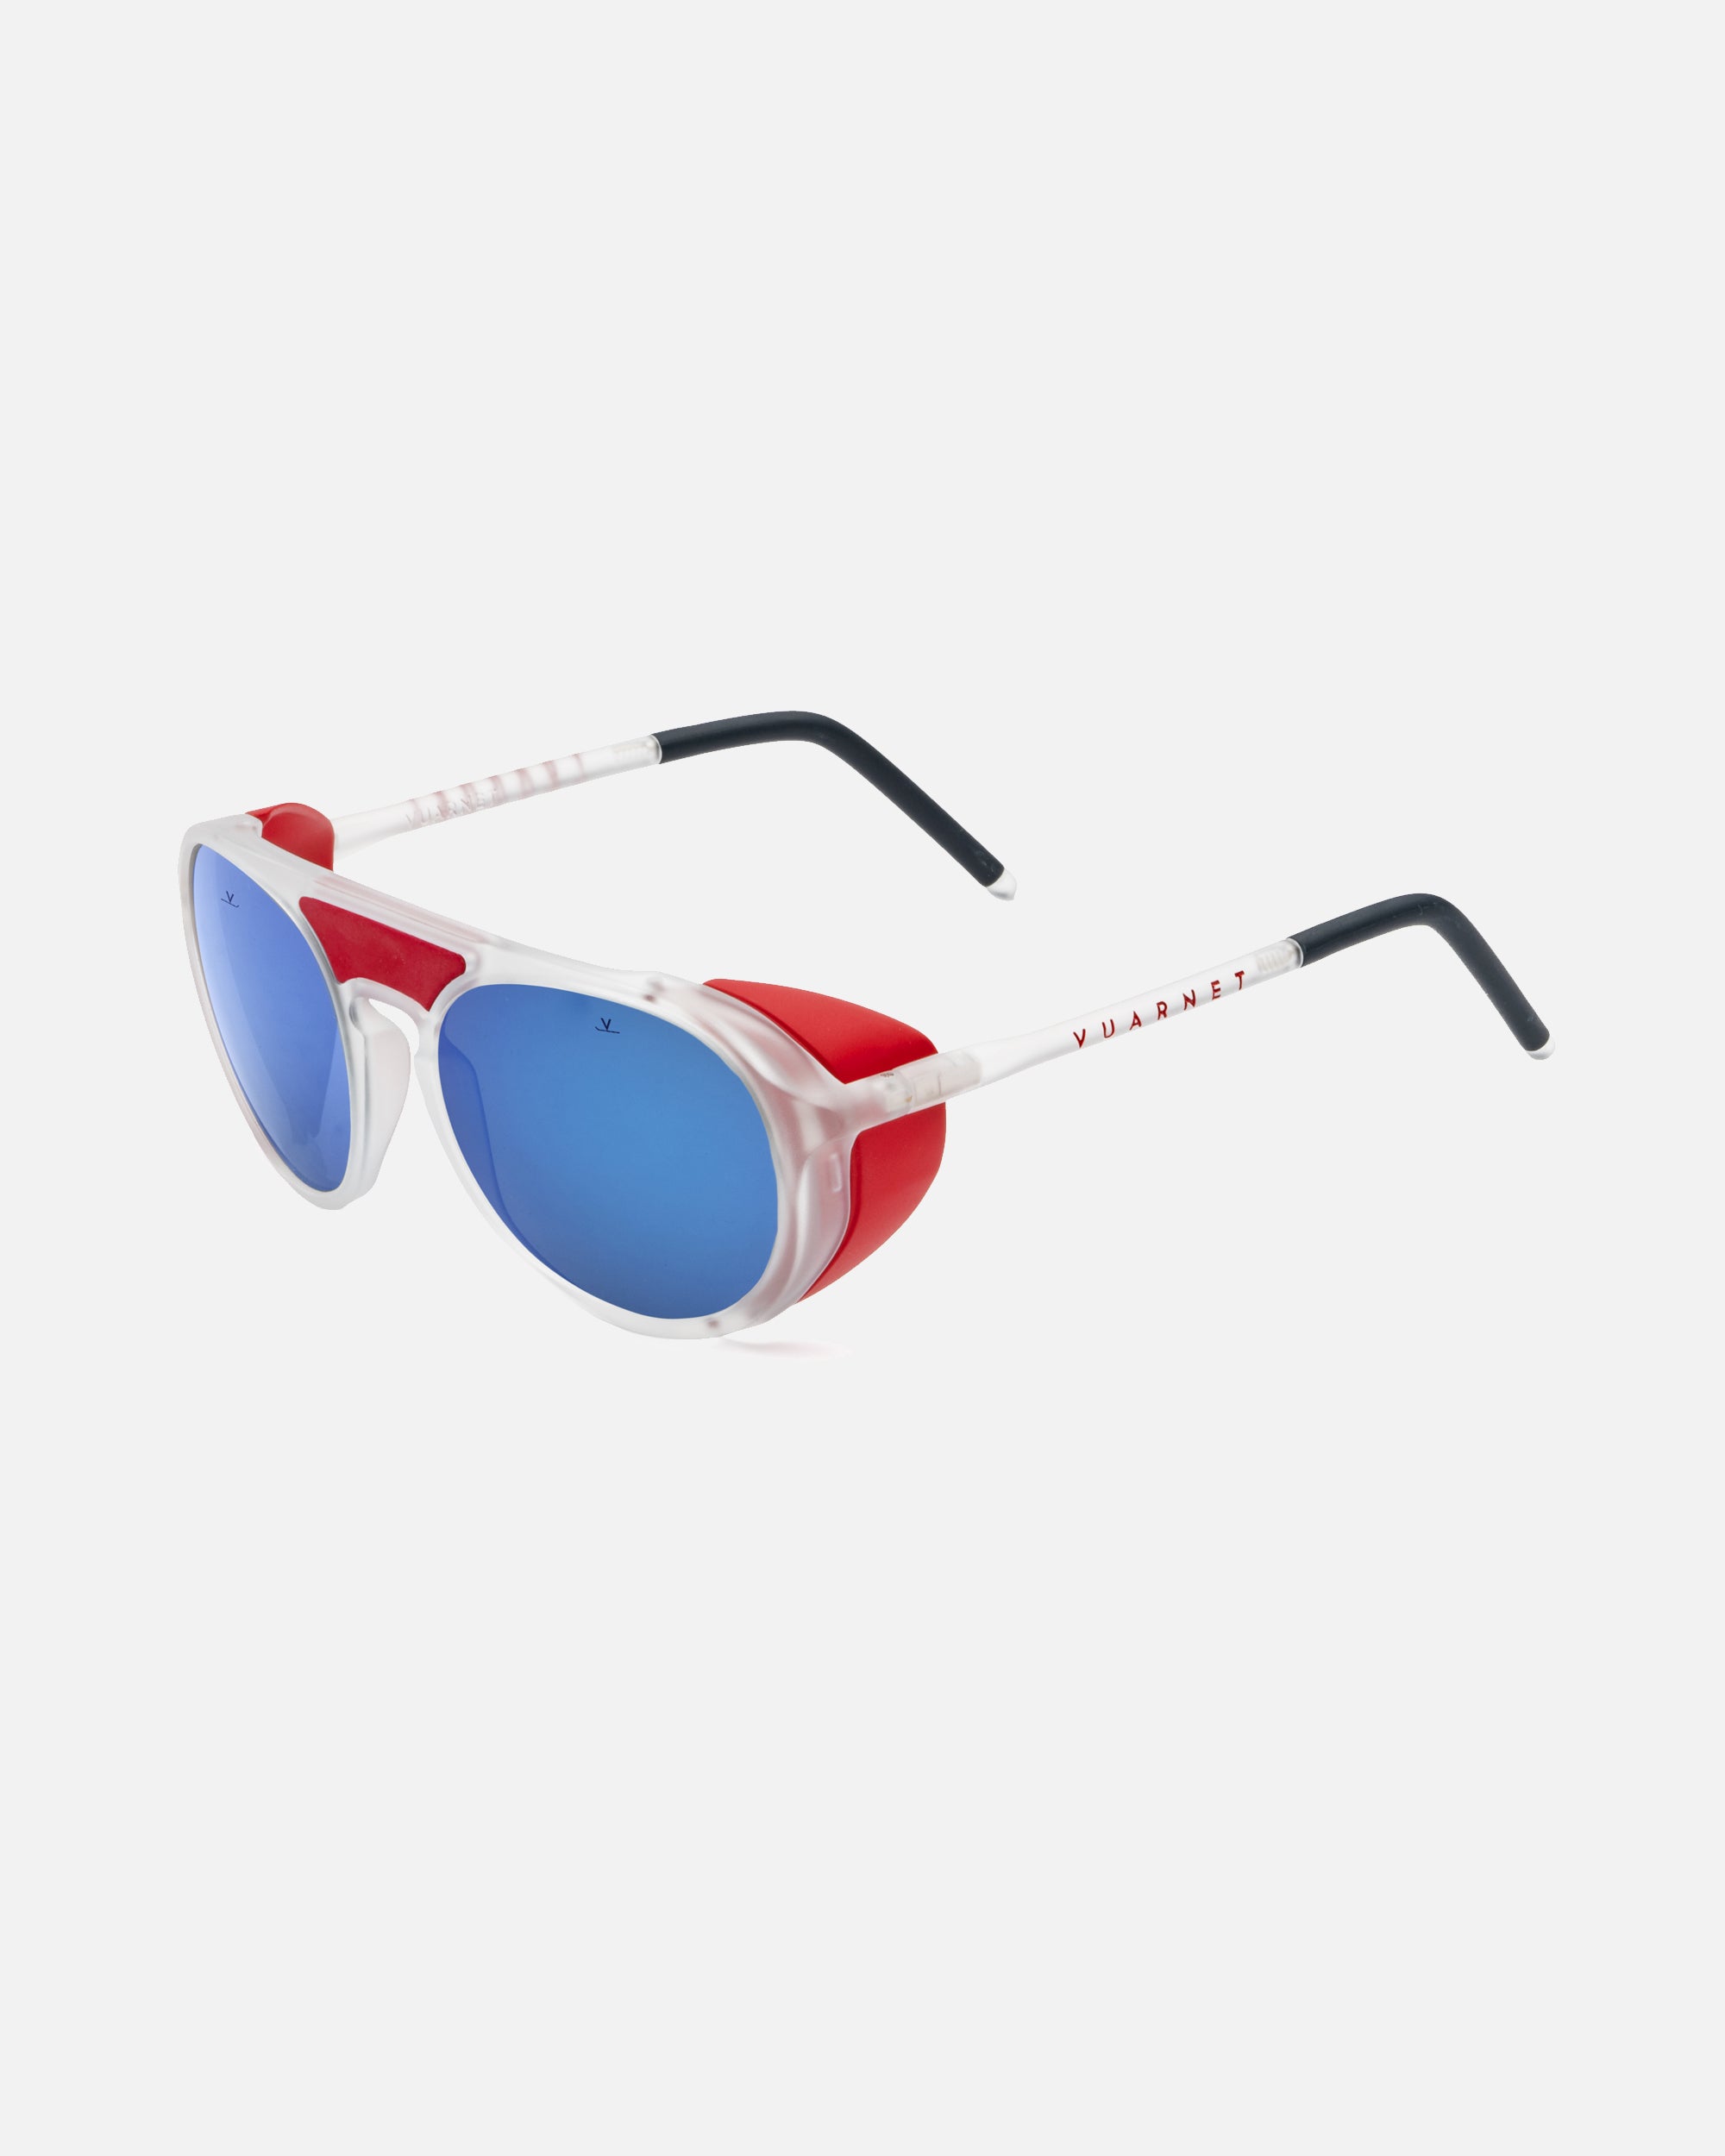 VUARNET 'ICE FACTORY' SKI Sunglasses /Crystal Black, 57% OFF